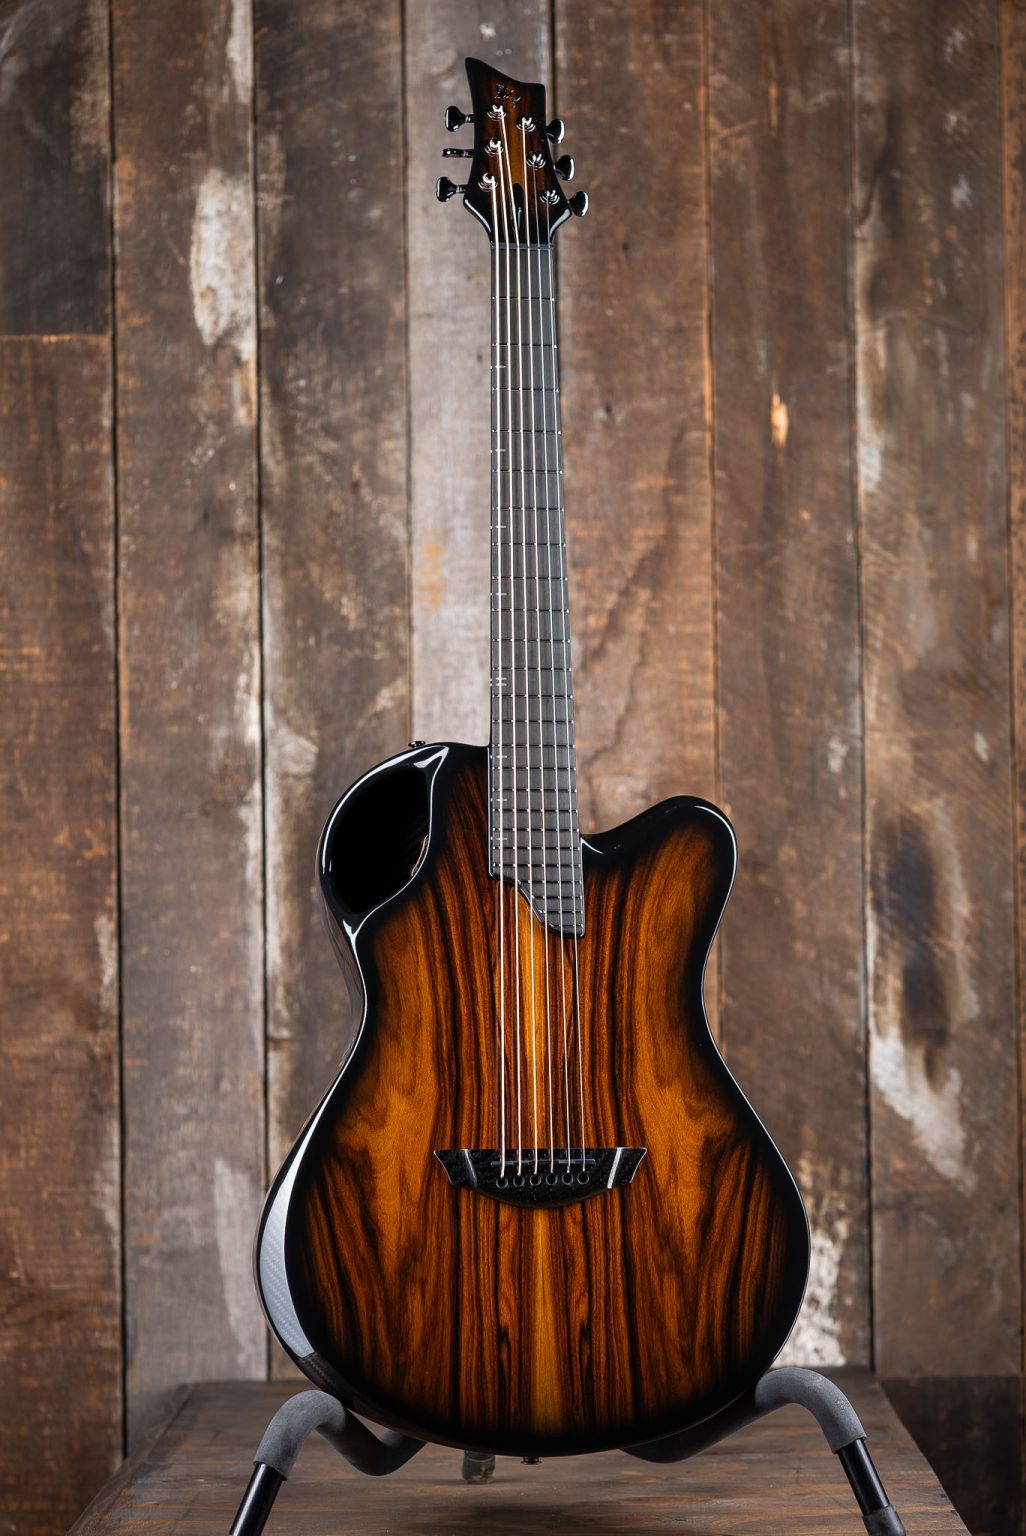 Emerald X20 guitar in wood finish carbon fiber against rustic background